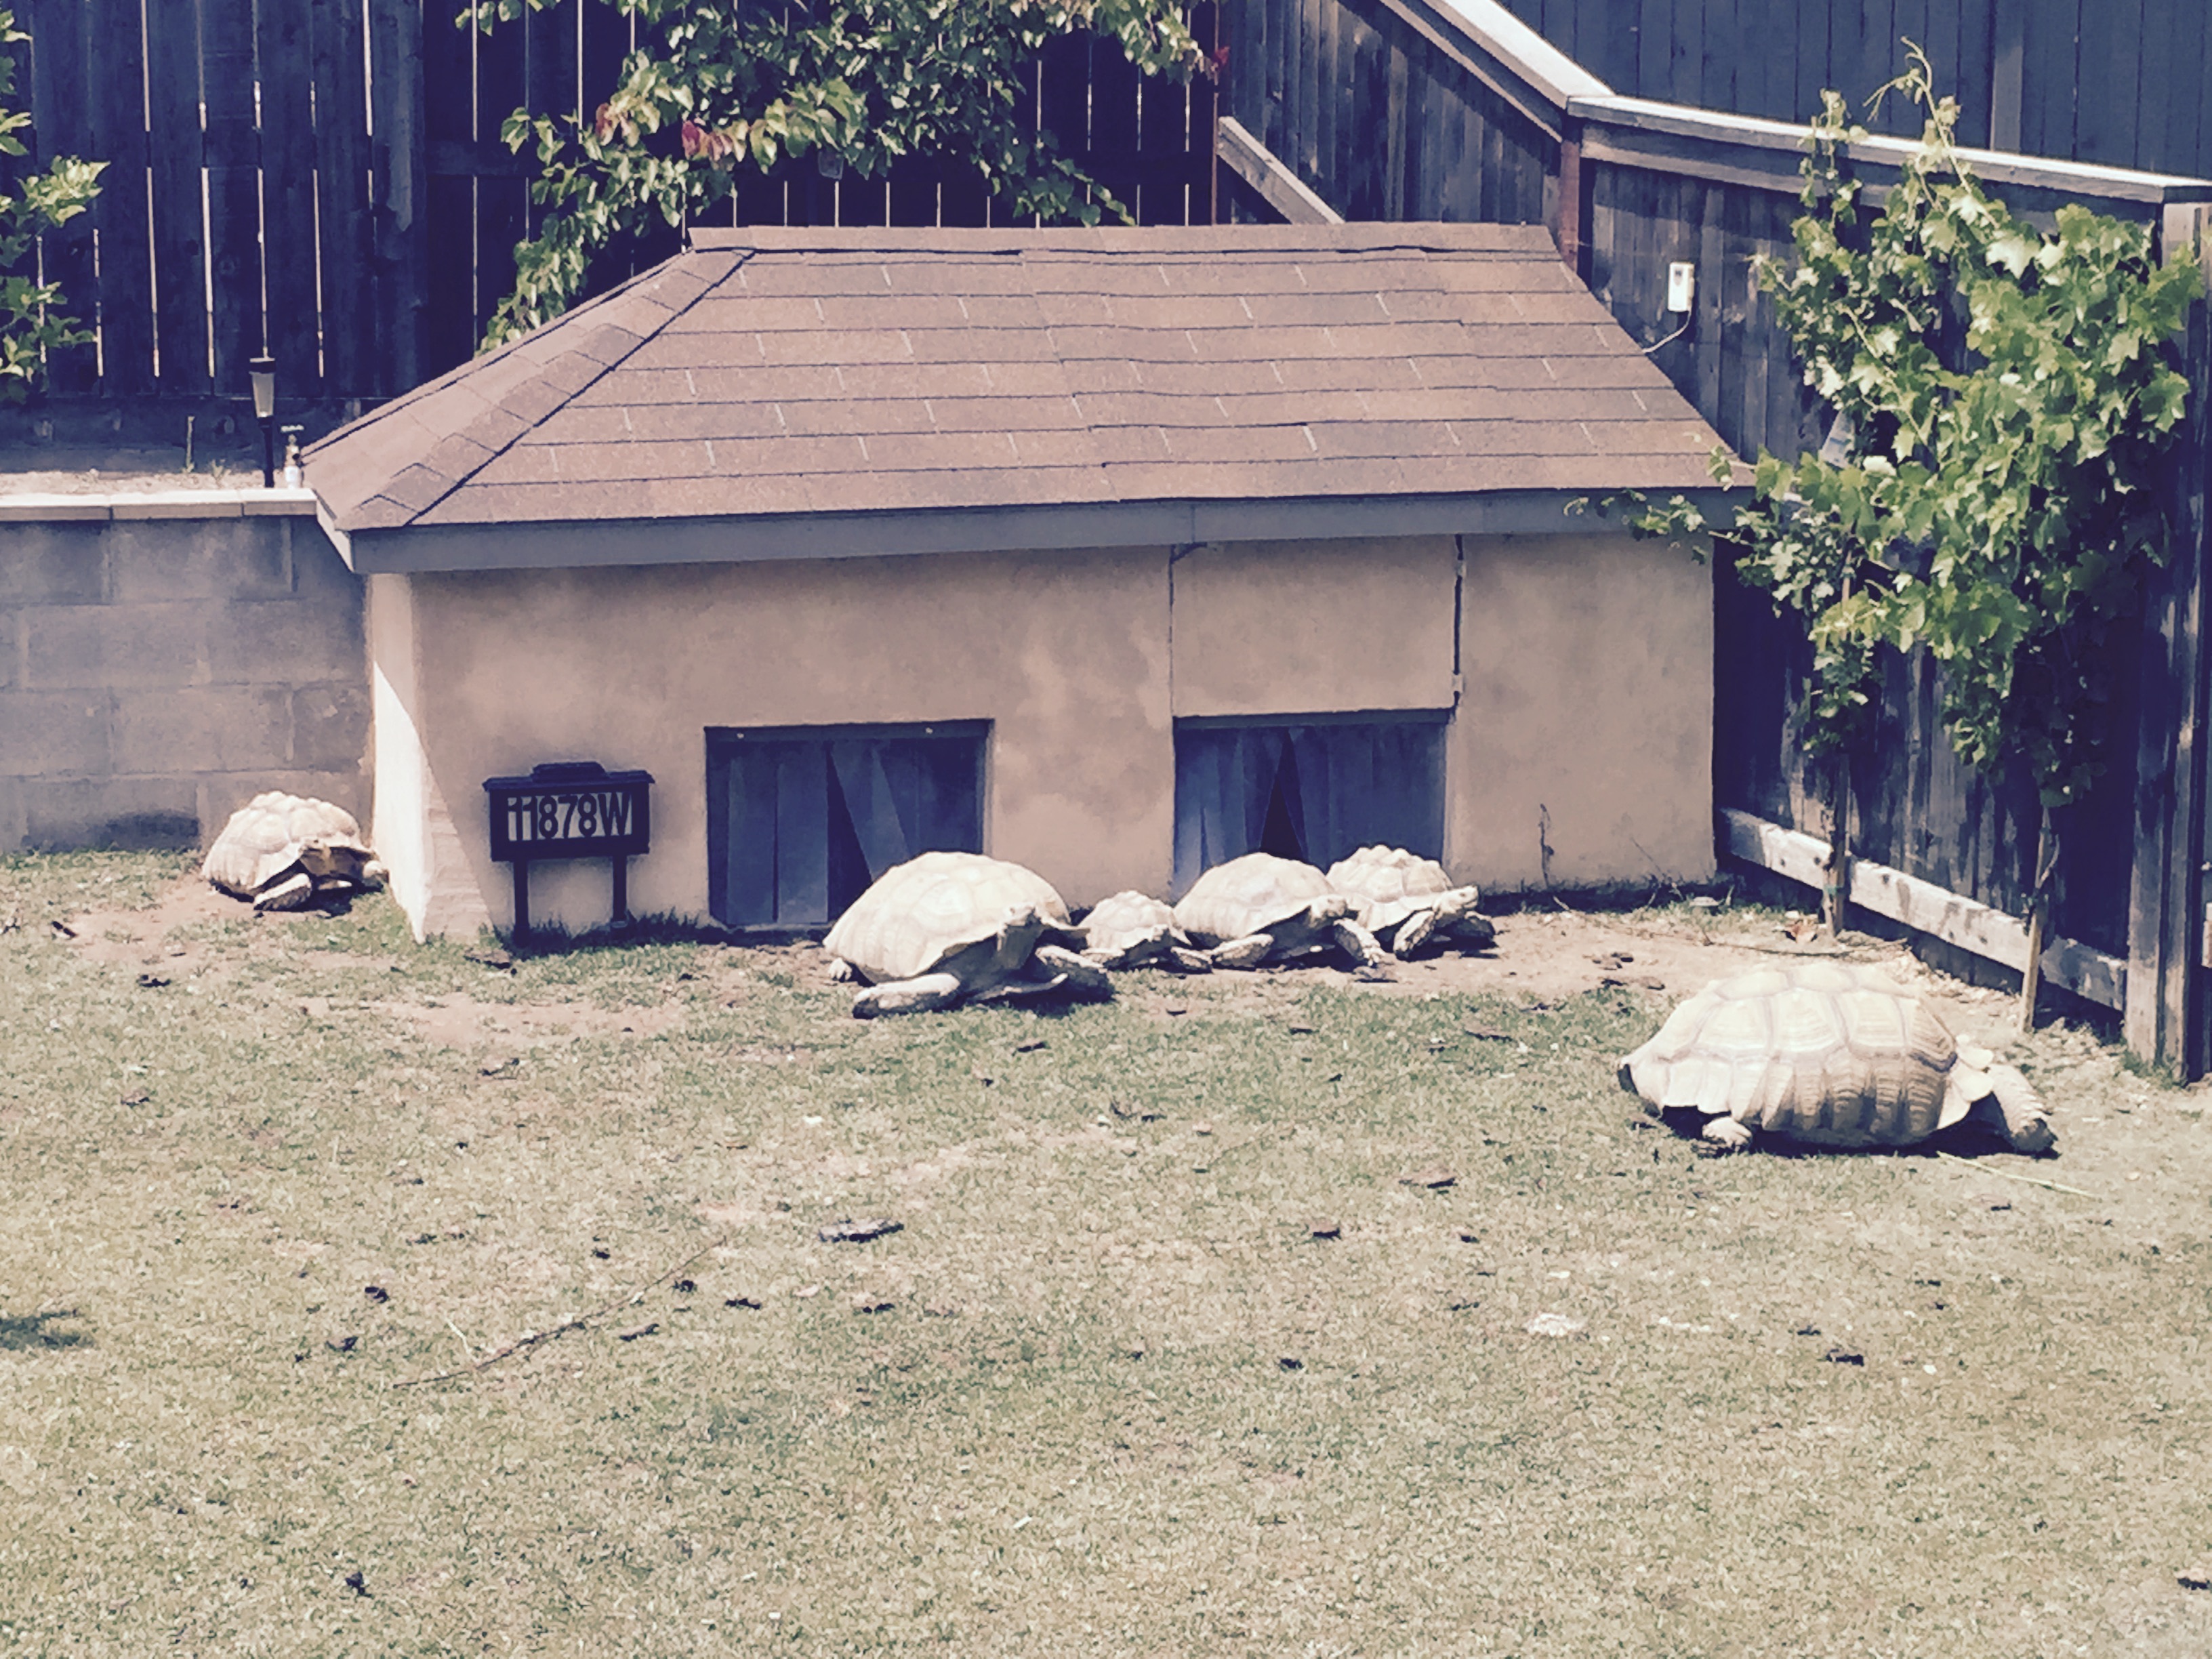 The tortoise house